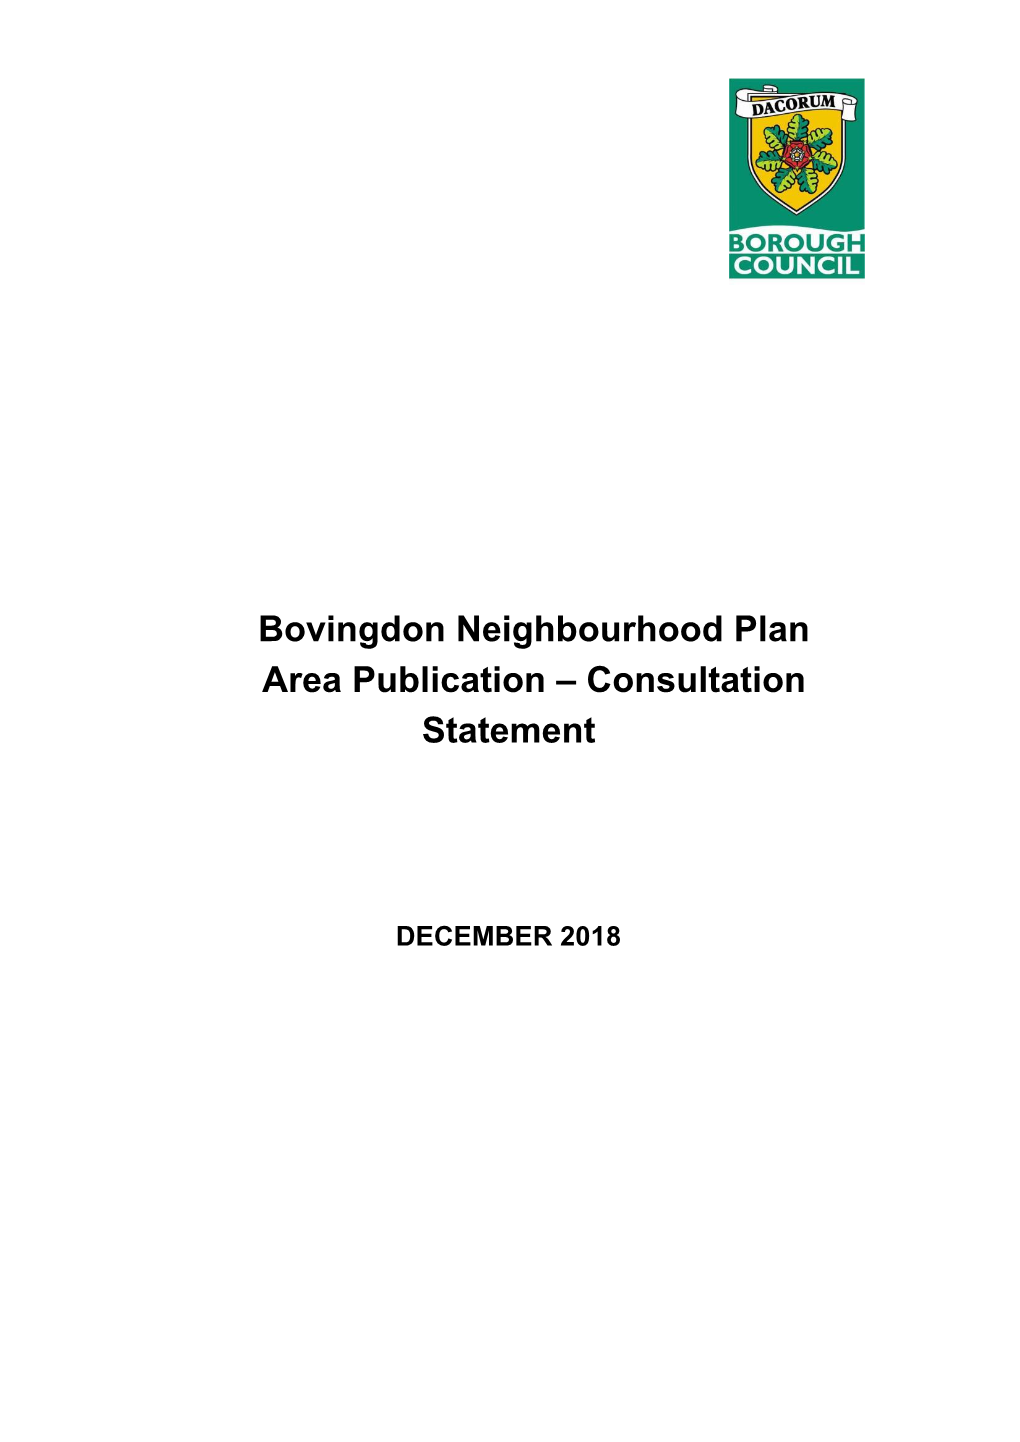 Bovingdon Neighbourhood Plan Area Publication – Consultation Statement